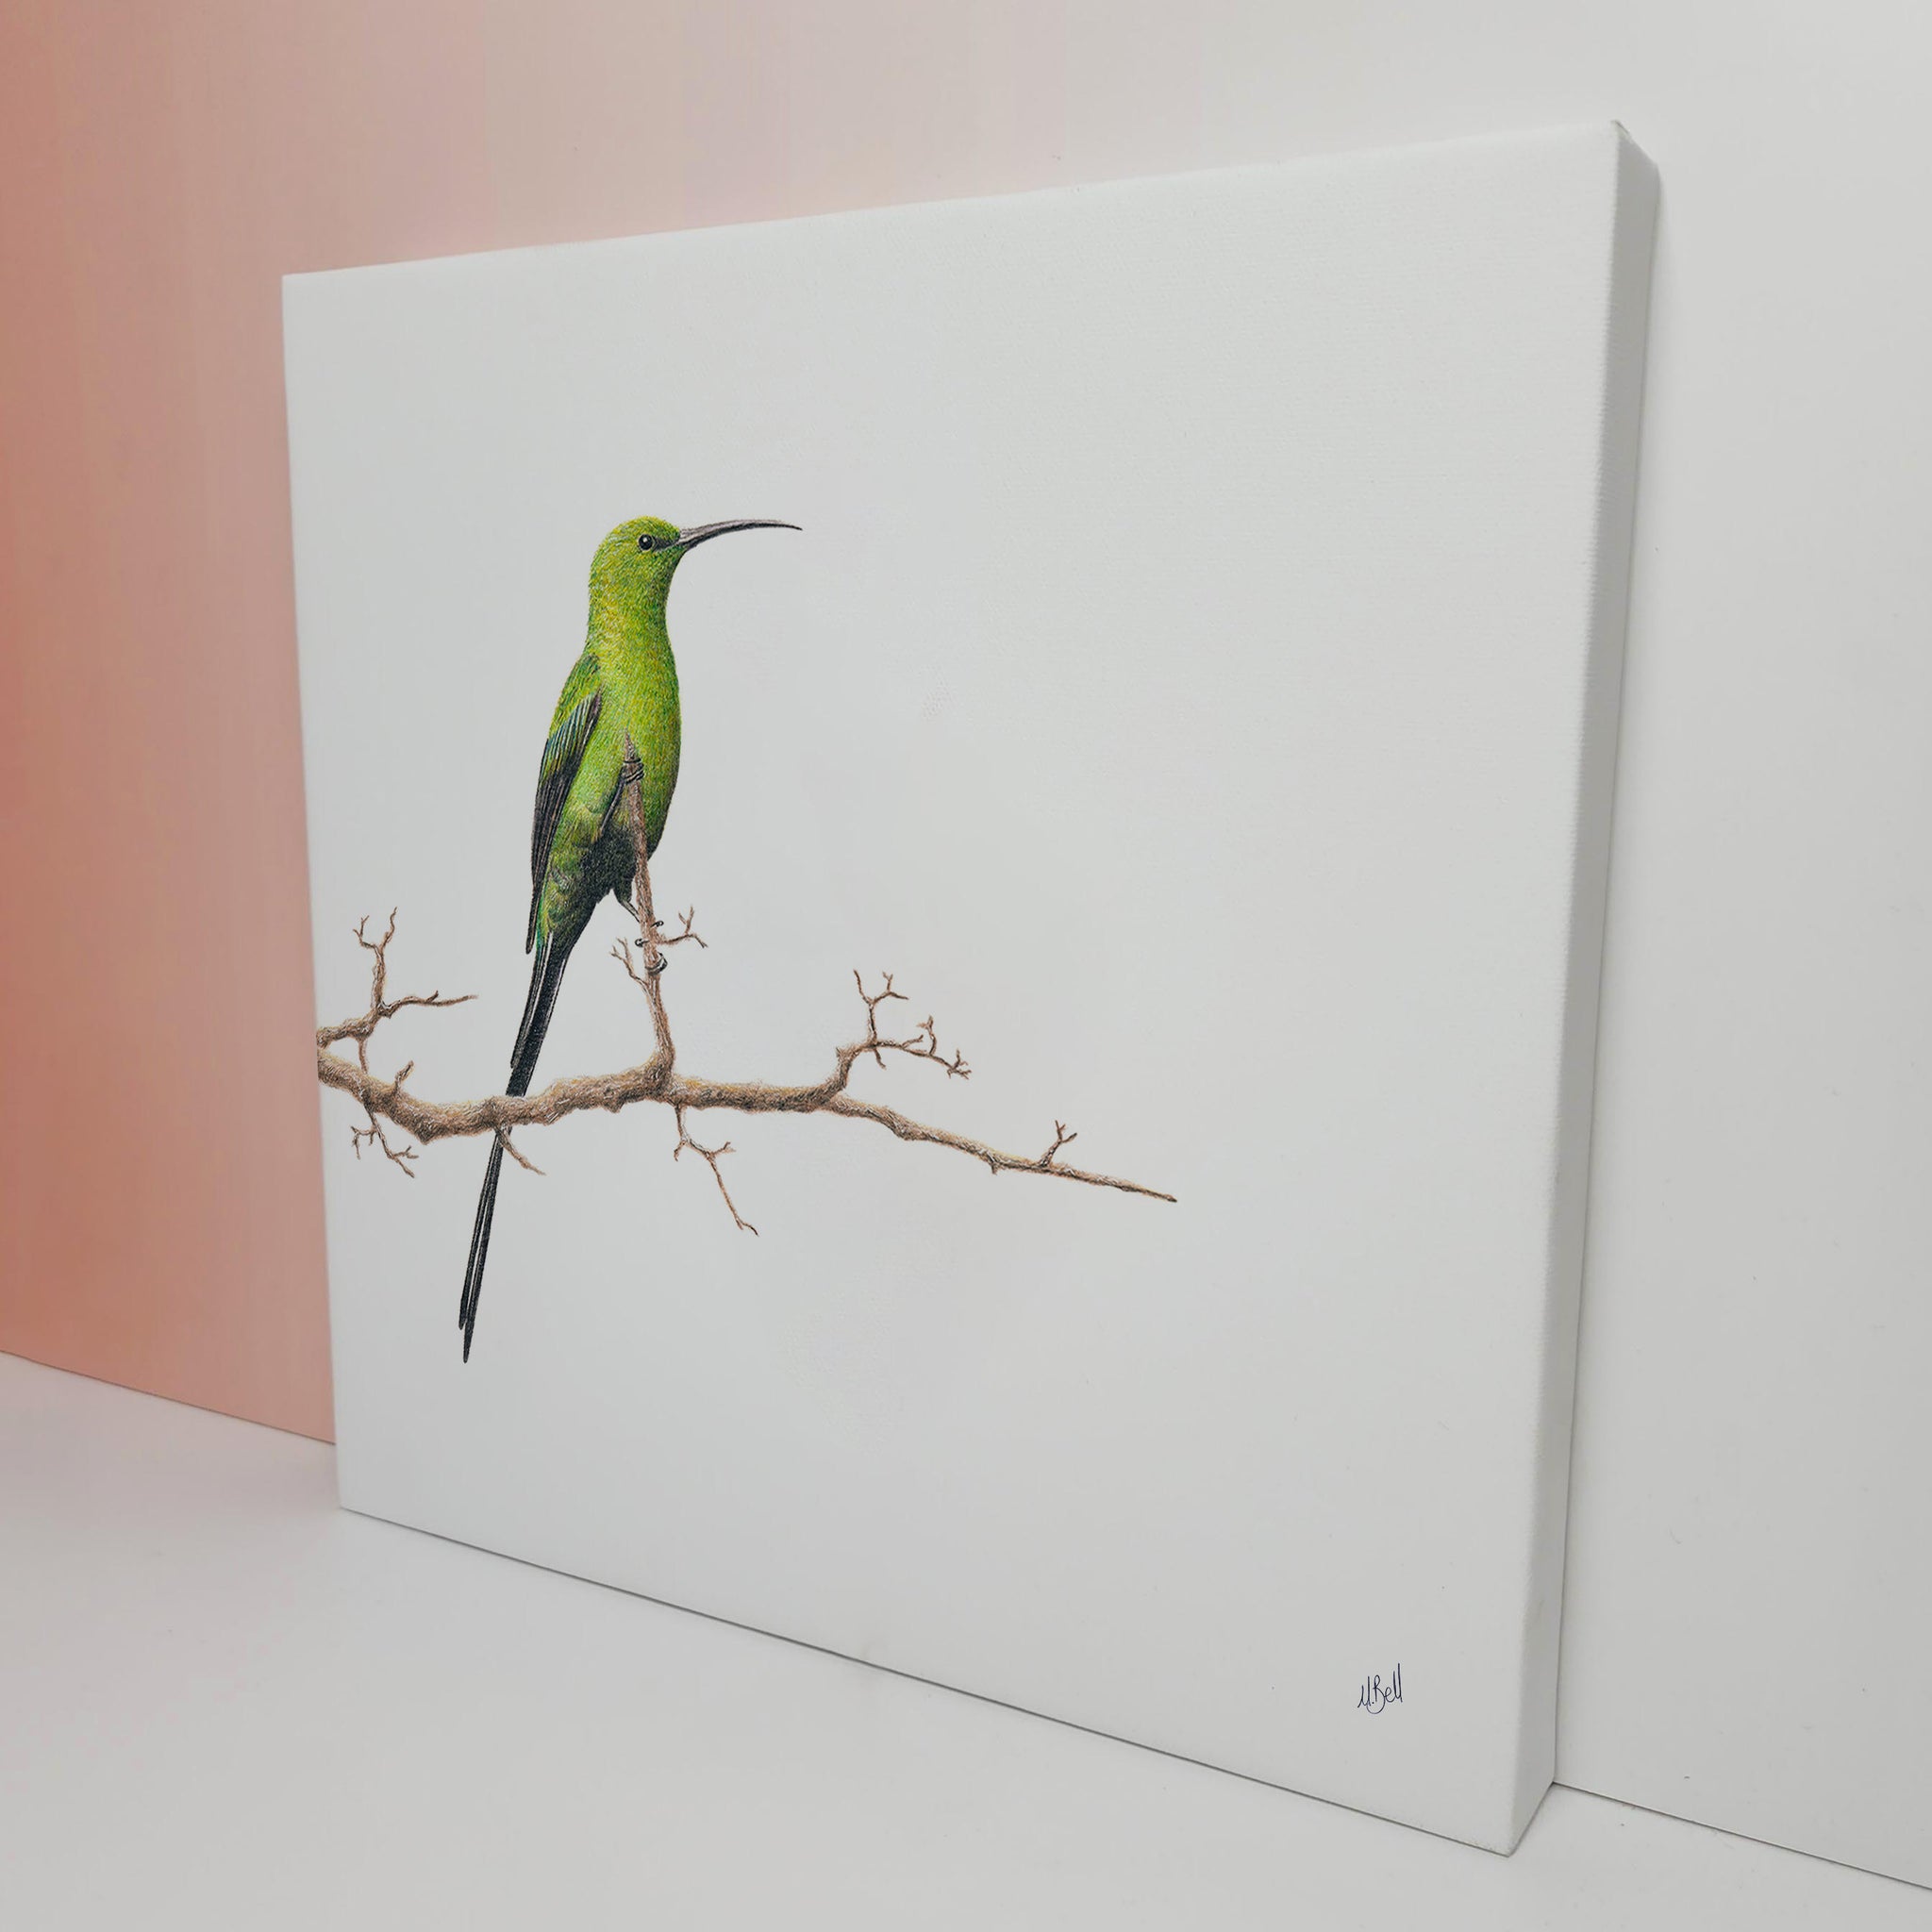 Malachite Sunbird bird artwork on stretched canvas